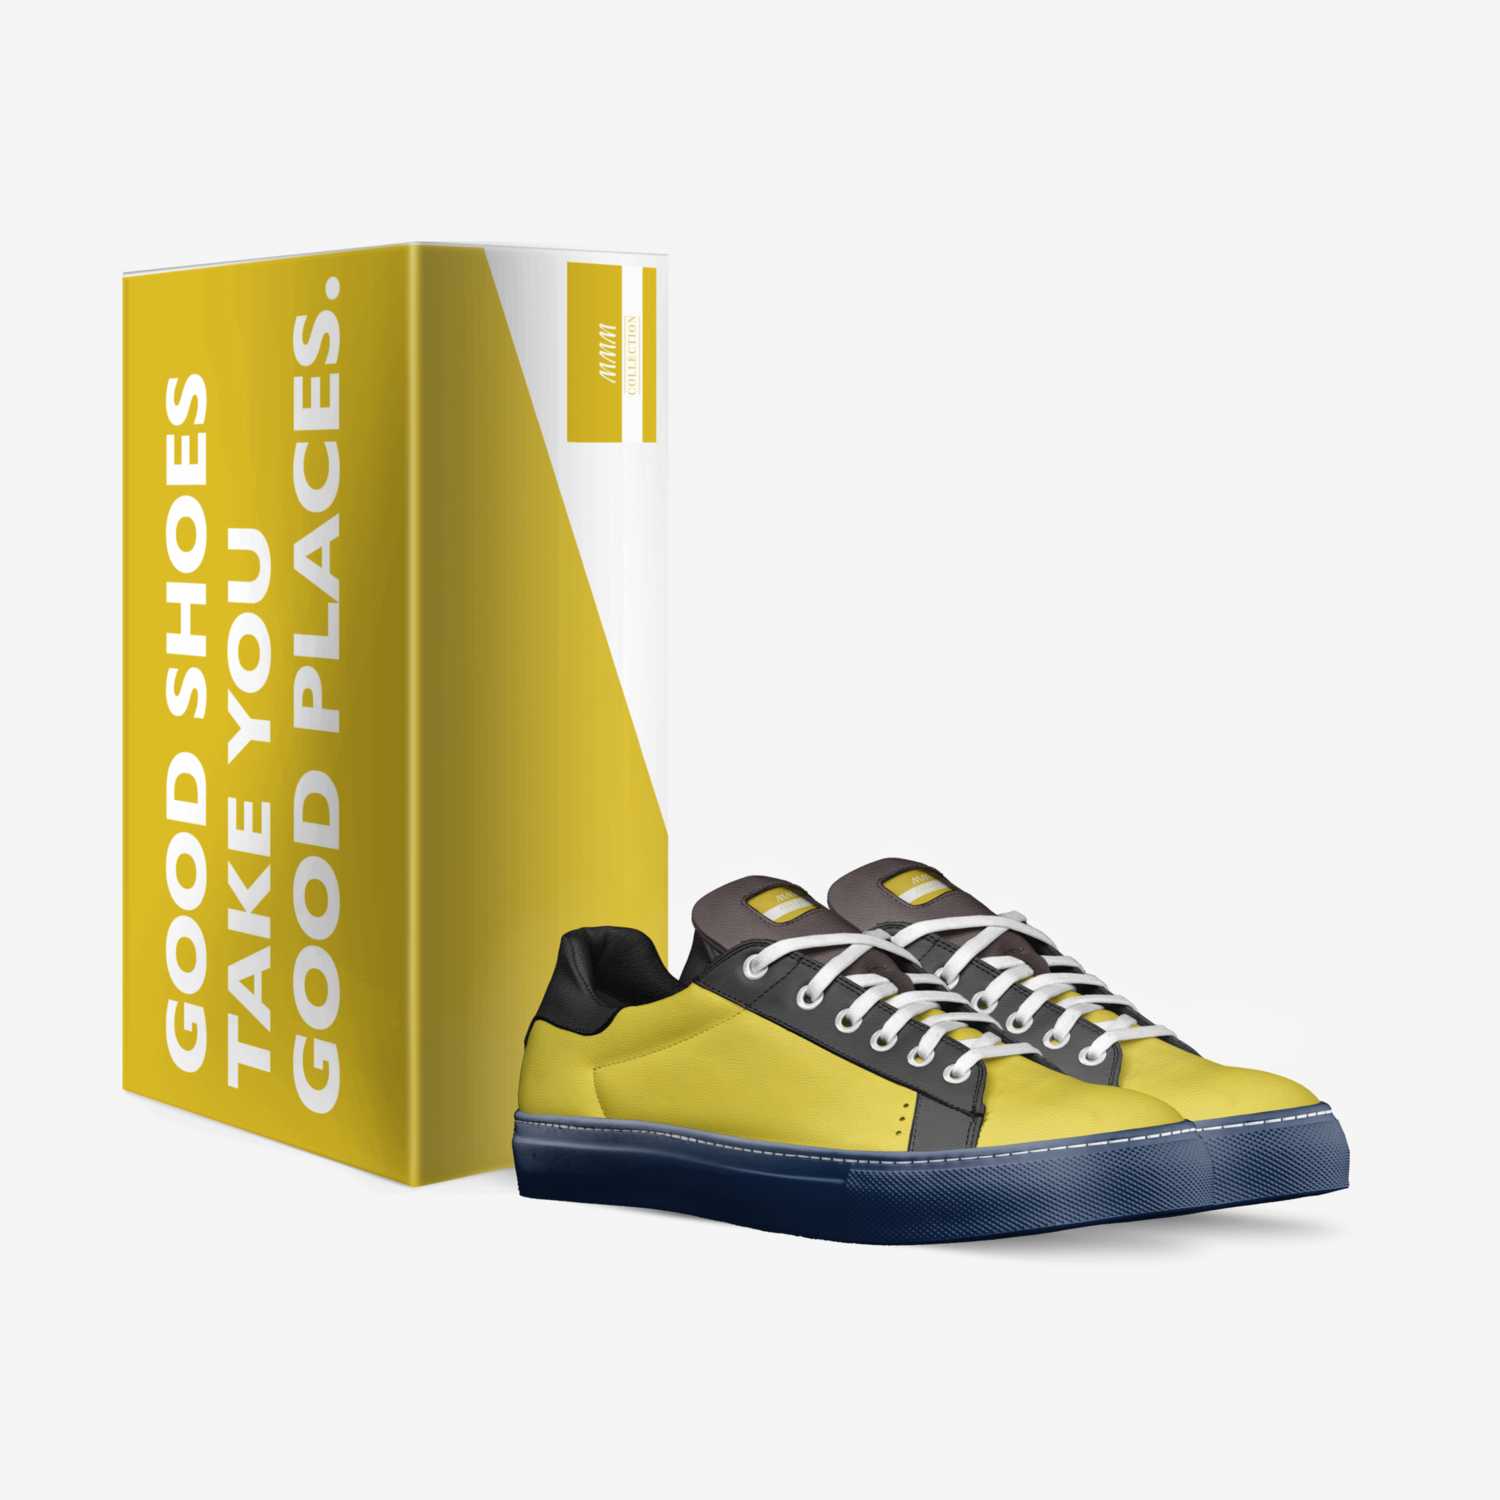 MMM custom made in Italy shoes by Davis Merritt | Box view